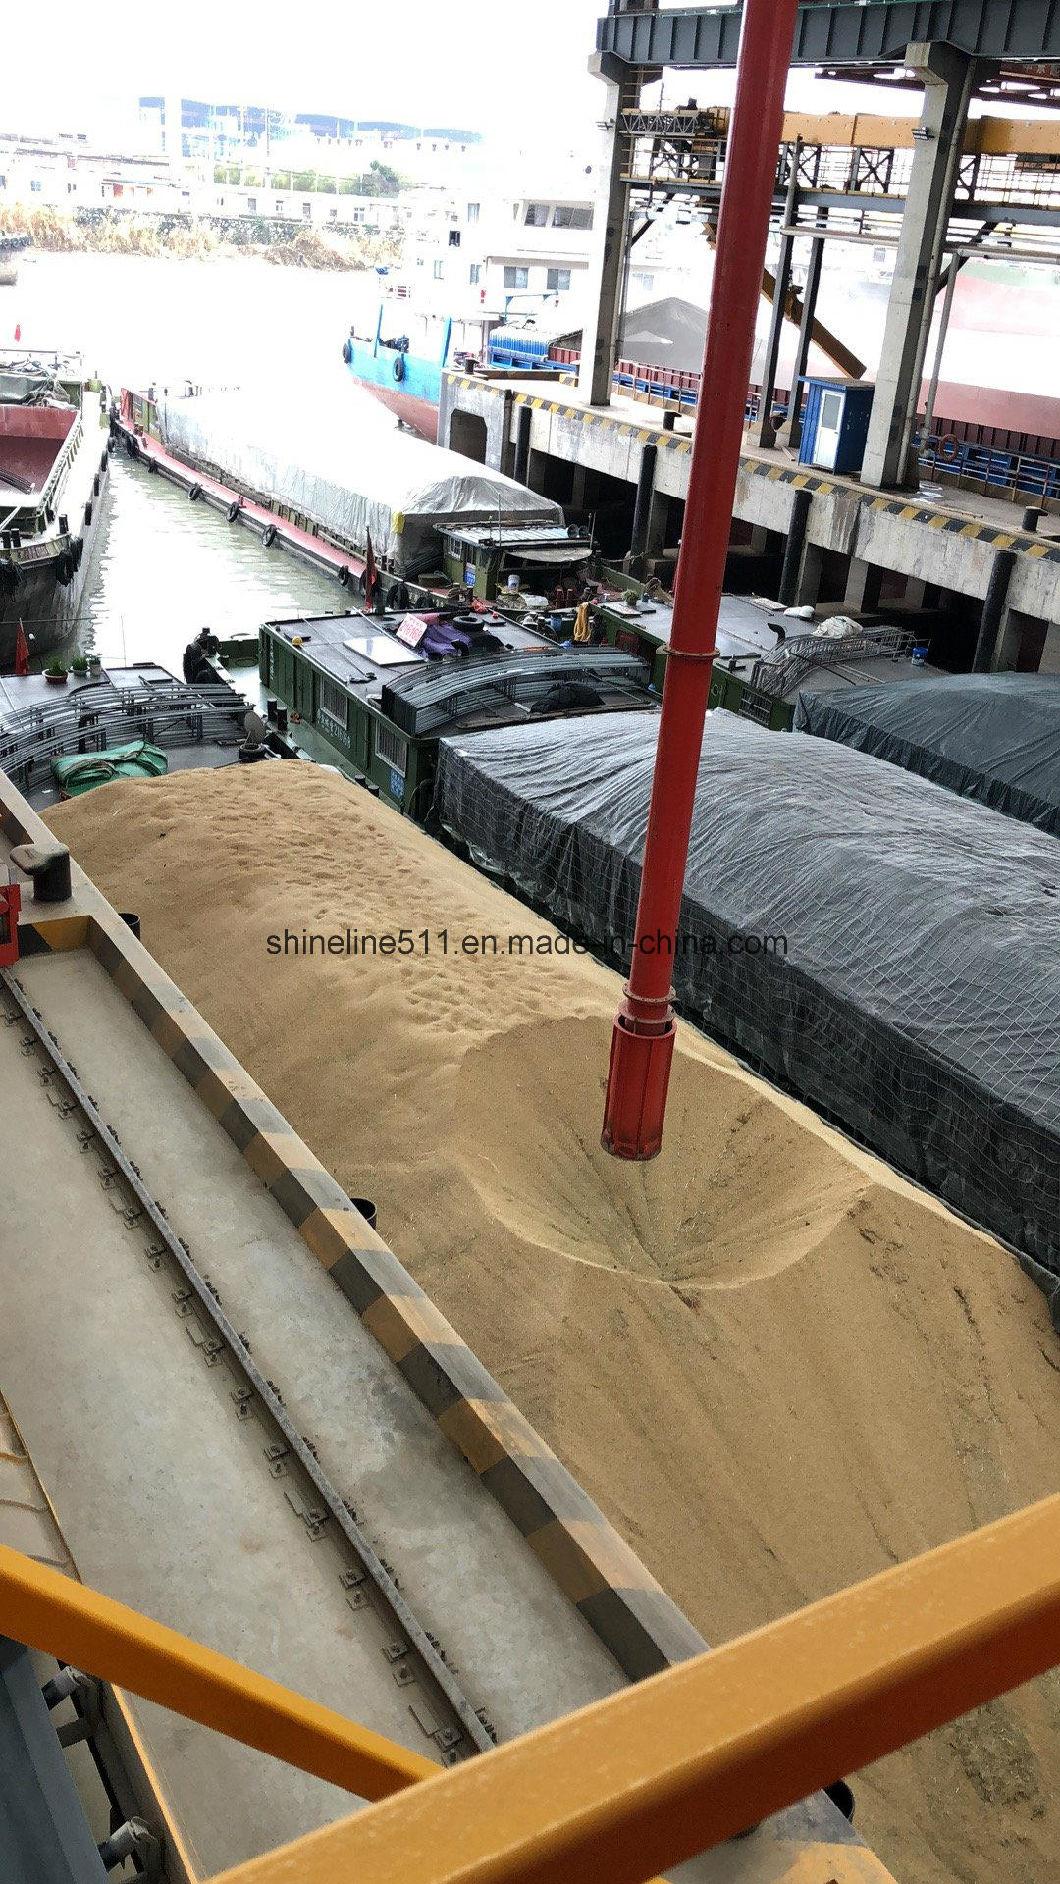 Hunan Xiangliang Machinery Manufacture Co., Ltd. Pneumatic Tube System Price Port Grain Unloader